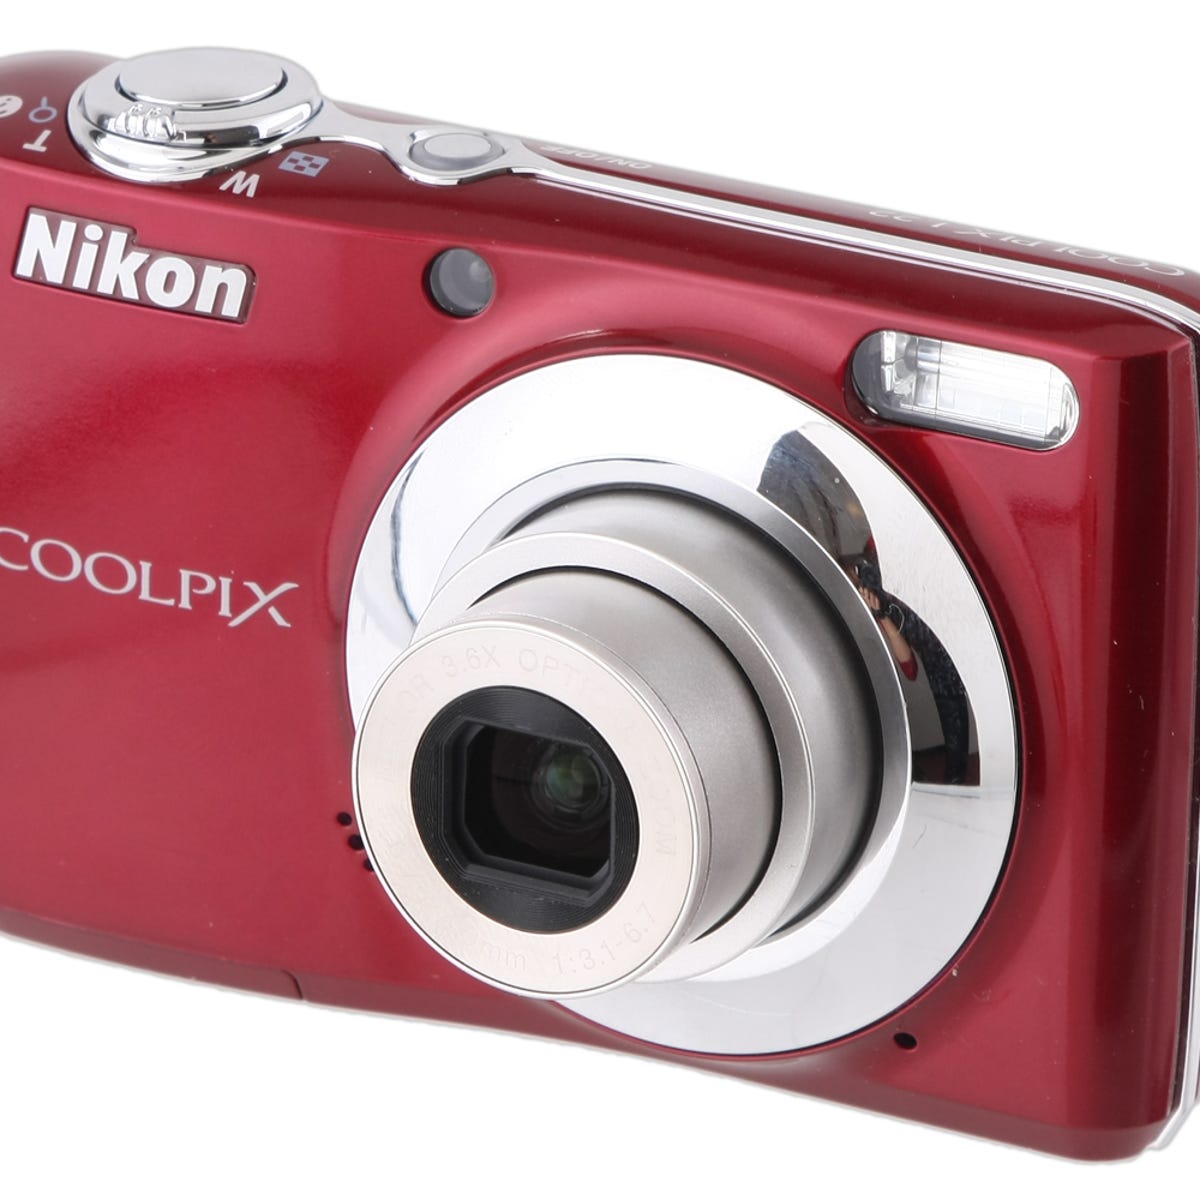 Nikon L22 - camera review